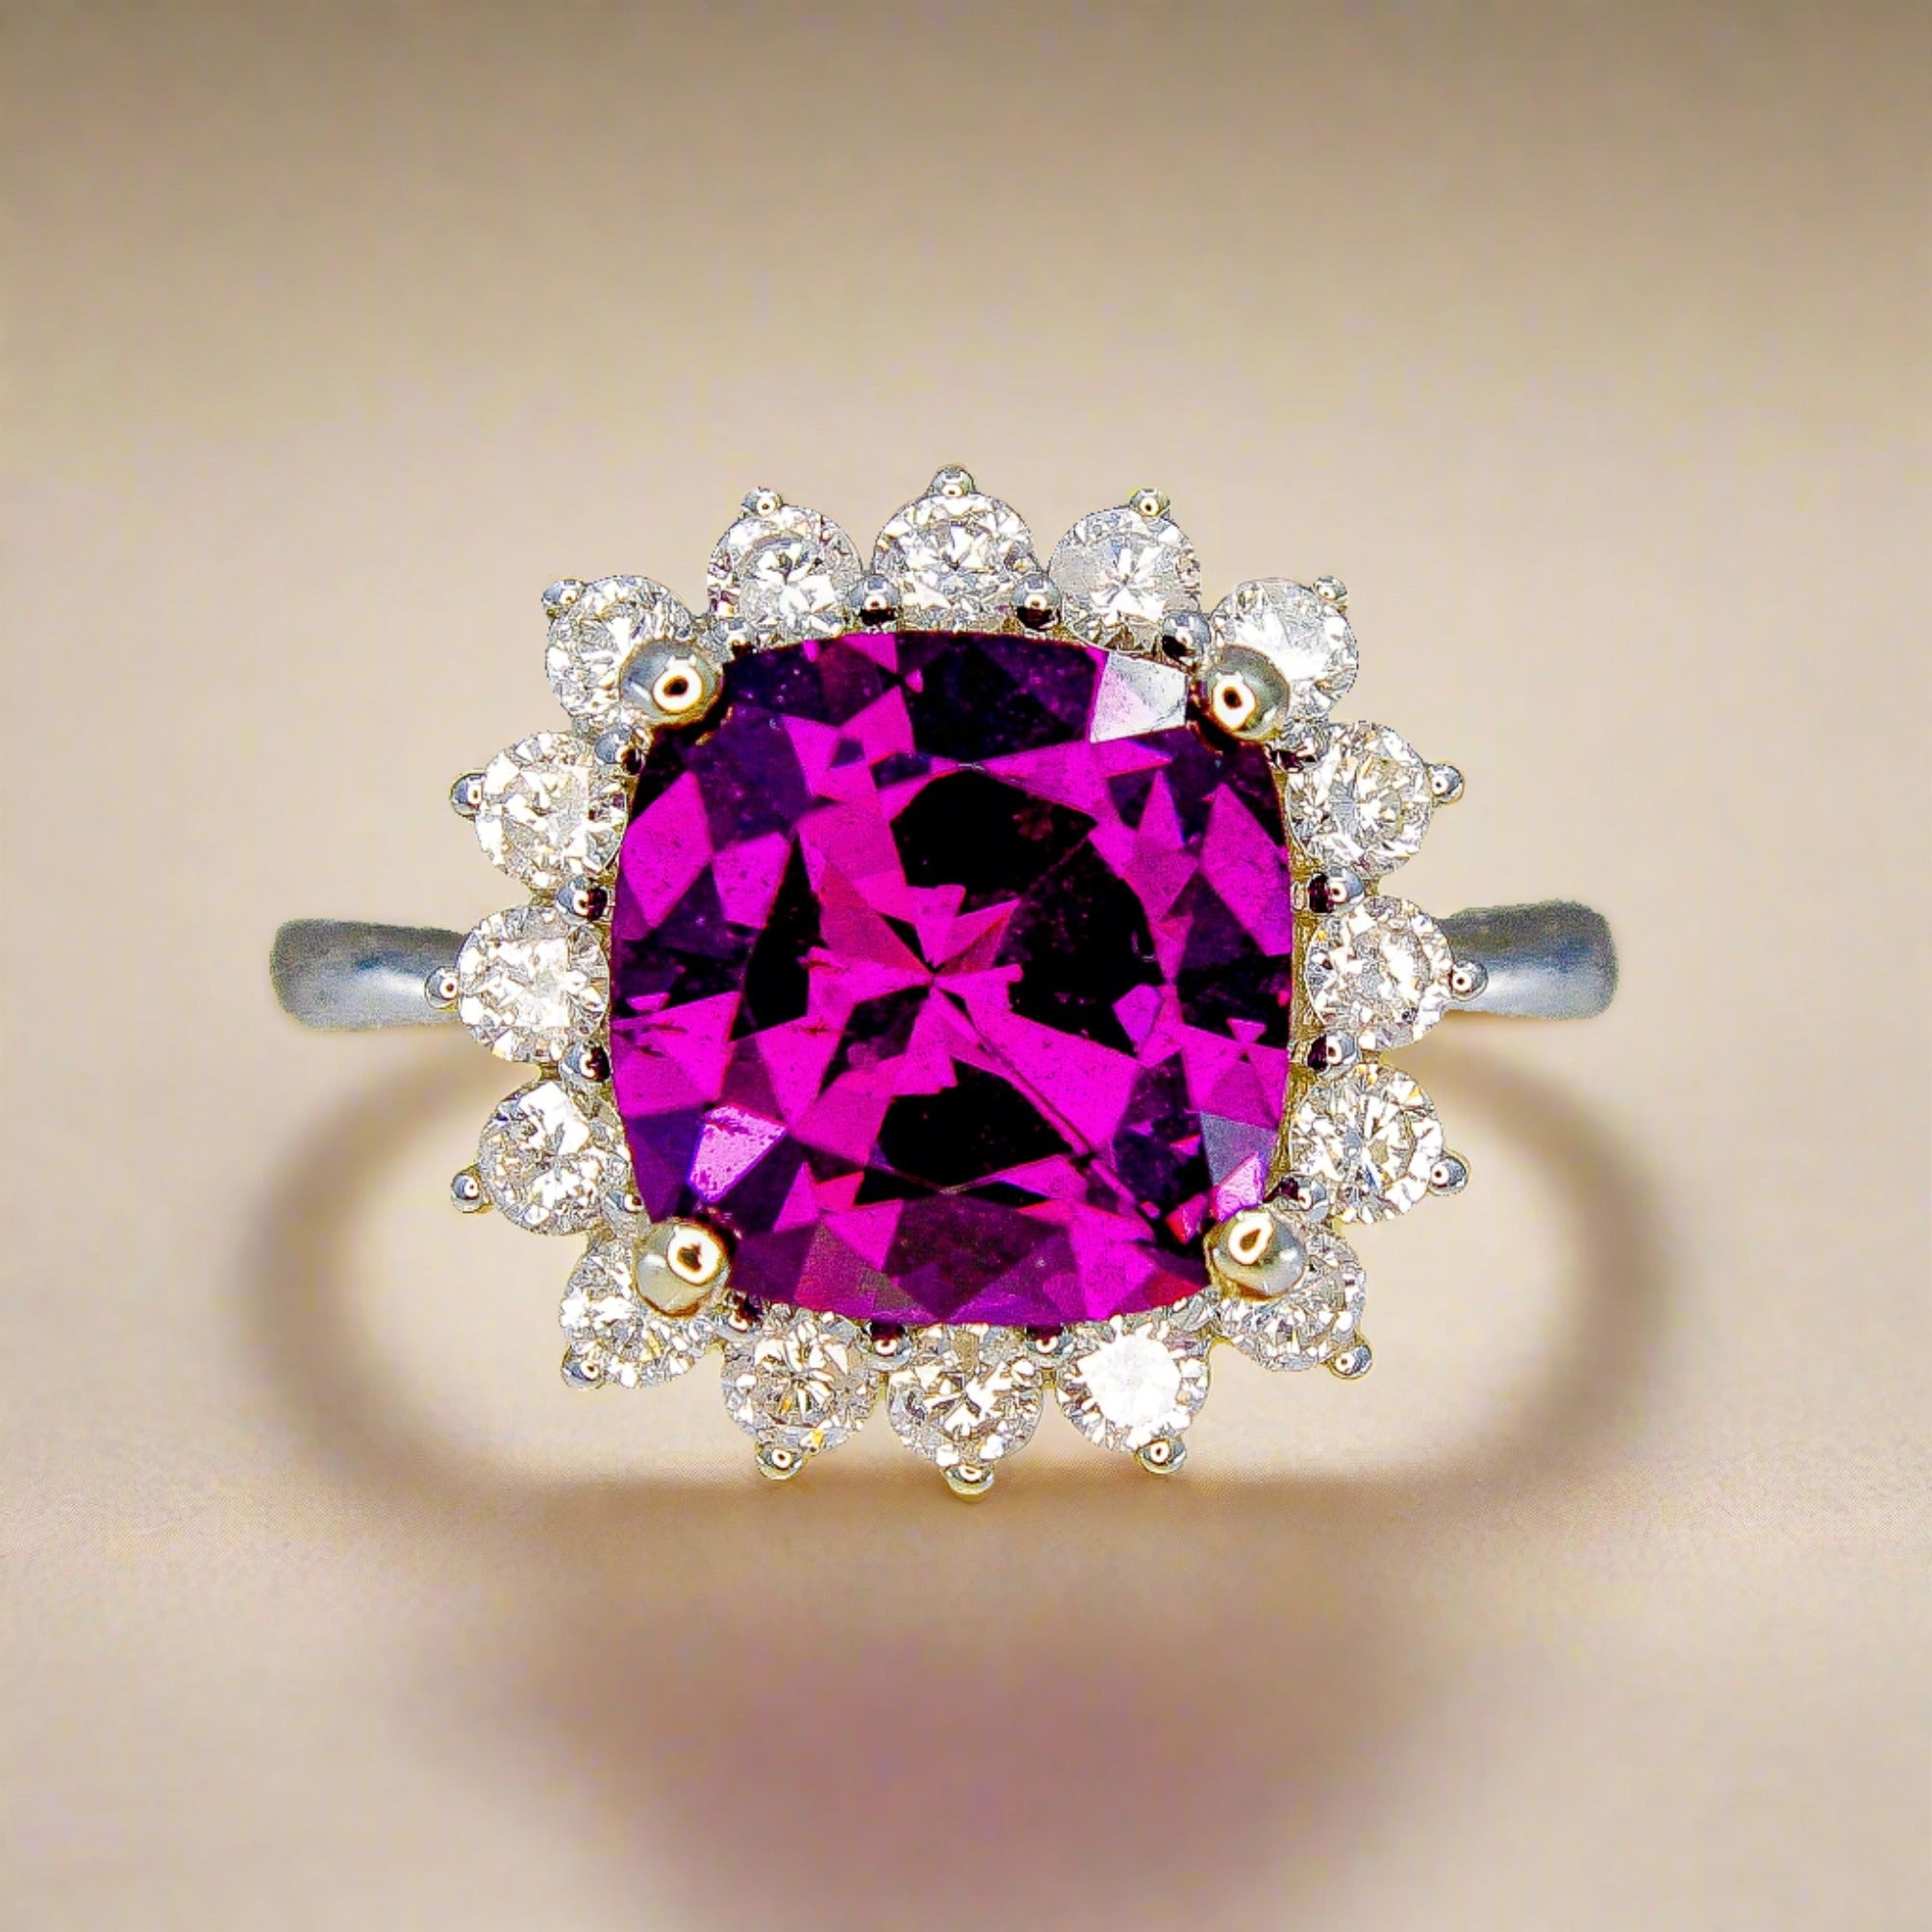 Royal Purple Garnet Ring in a Diamond Halo